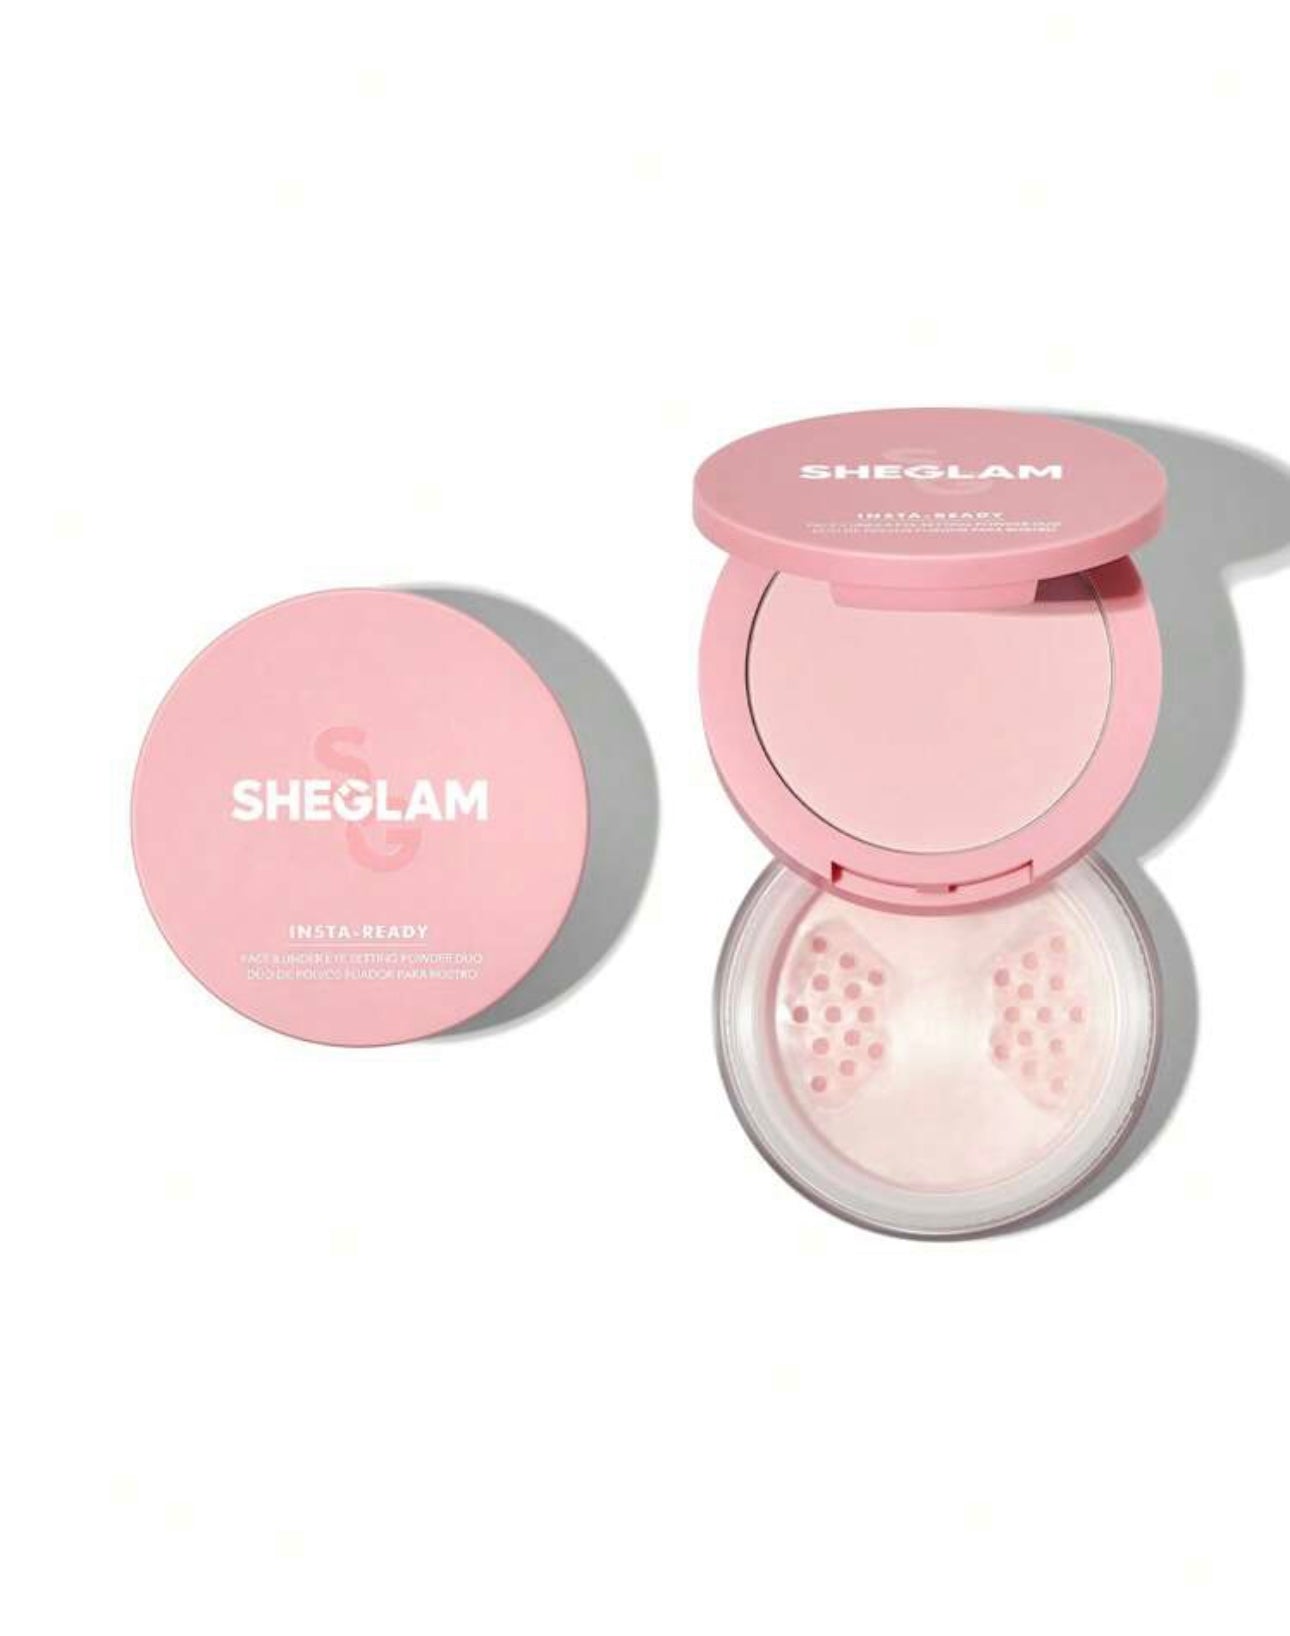 SHEGLAM Insta-Ready Face & Under EyeSetting Powder Duo